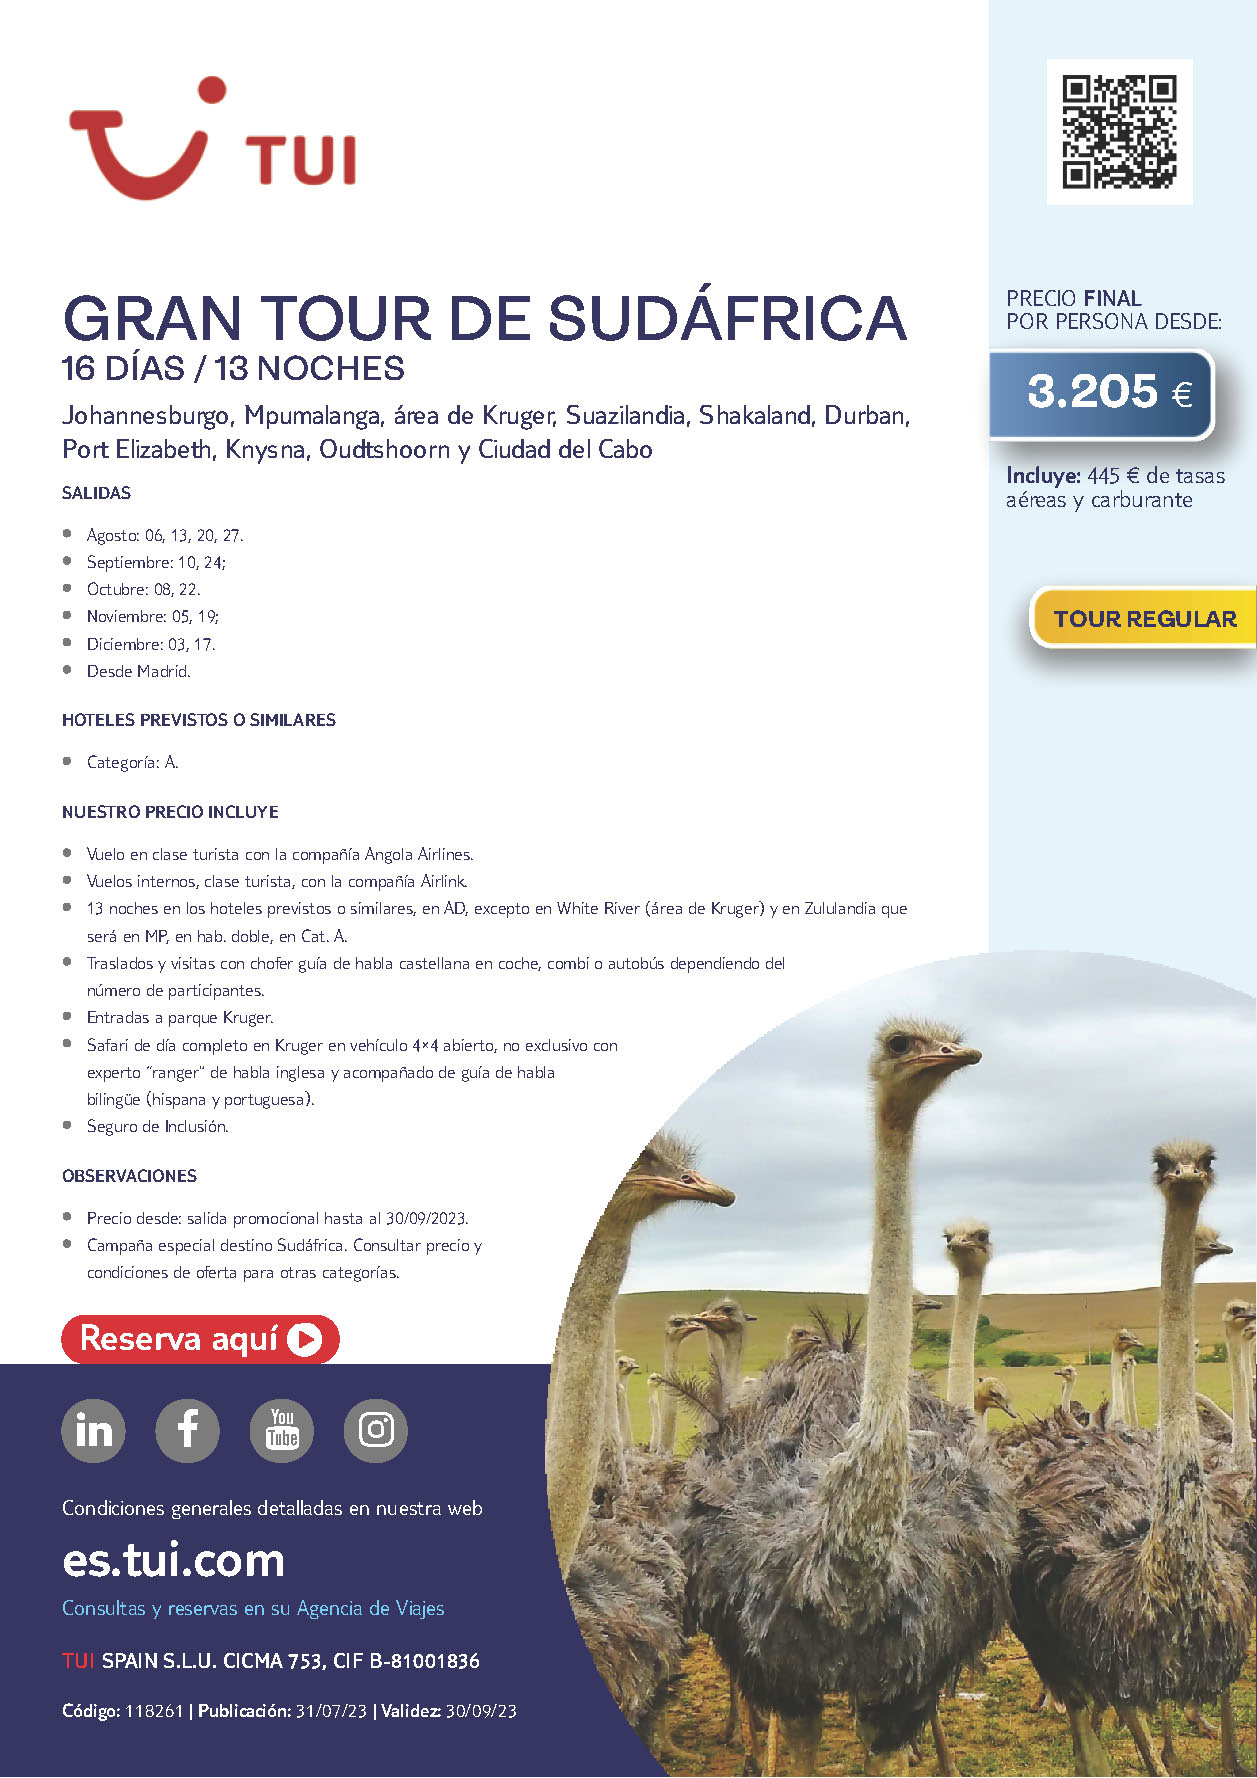 Oferta TUI Gran Tour de Sudafrica 16 dias 10 noches salidas desde Madrid Agosto a Diciembre 2023 vuelos Angola Airlines